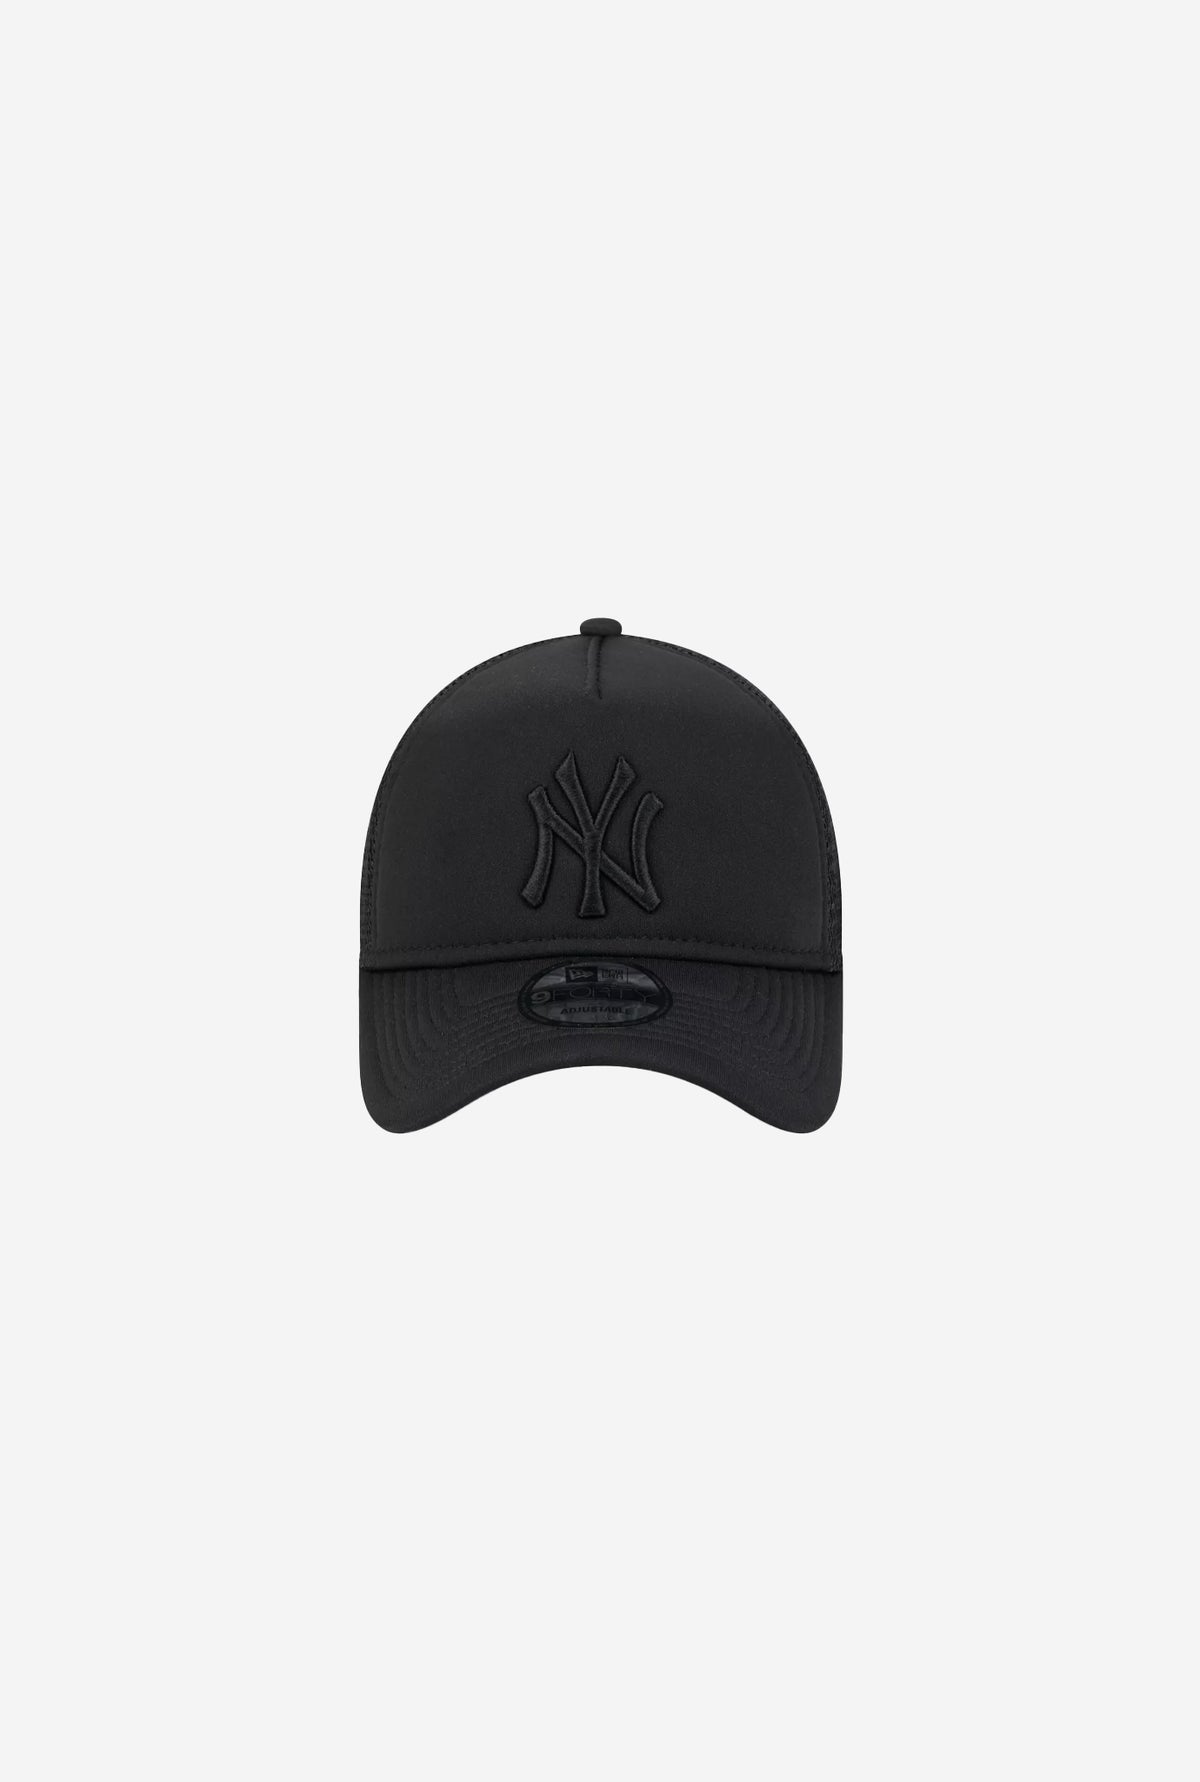 New York Yankees 9FORTY A-Frame Trucker - Black/Black